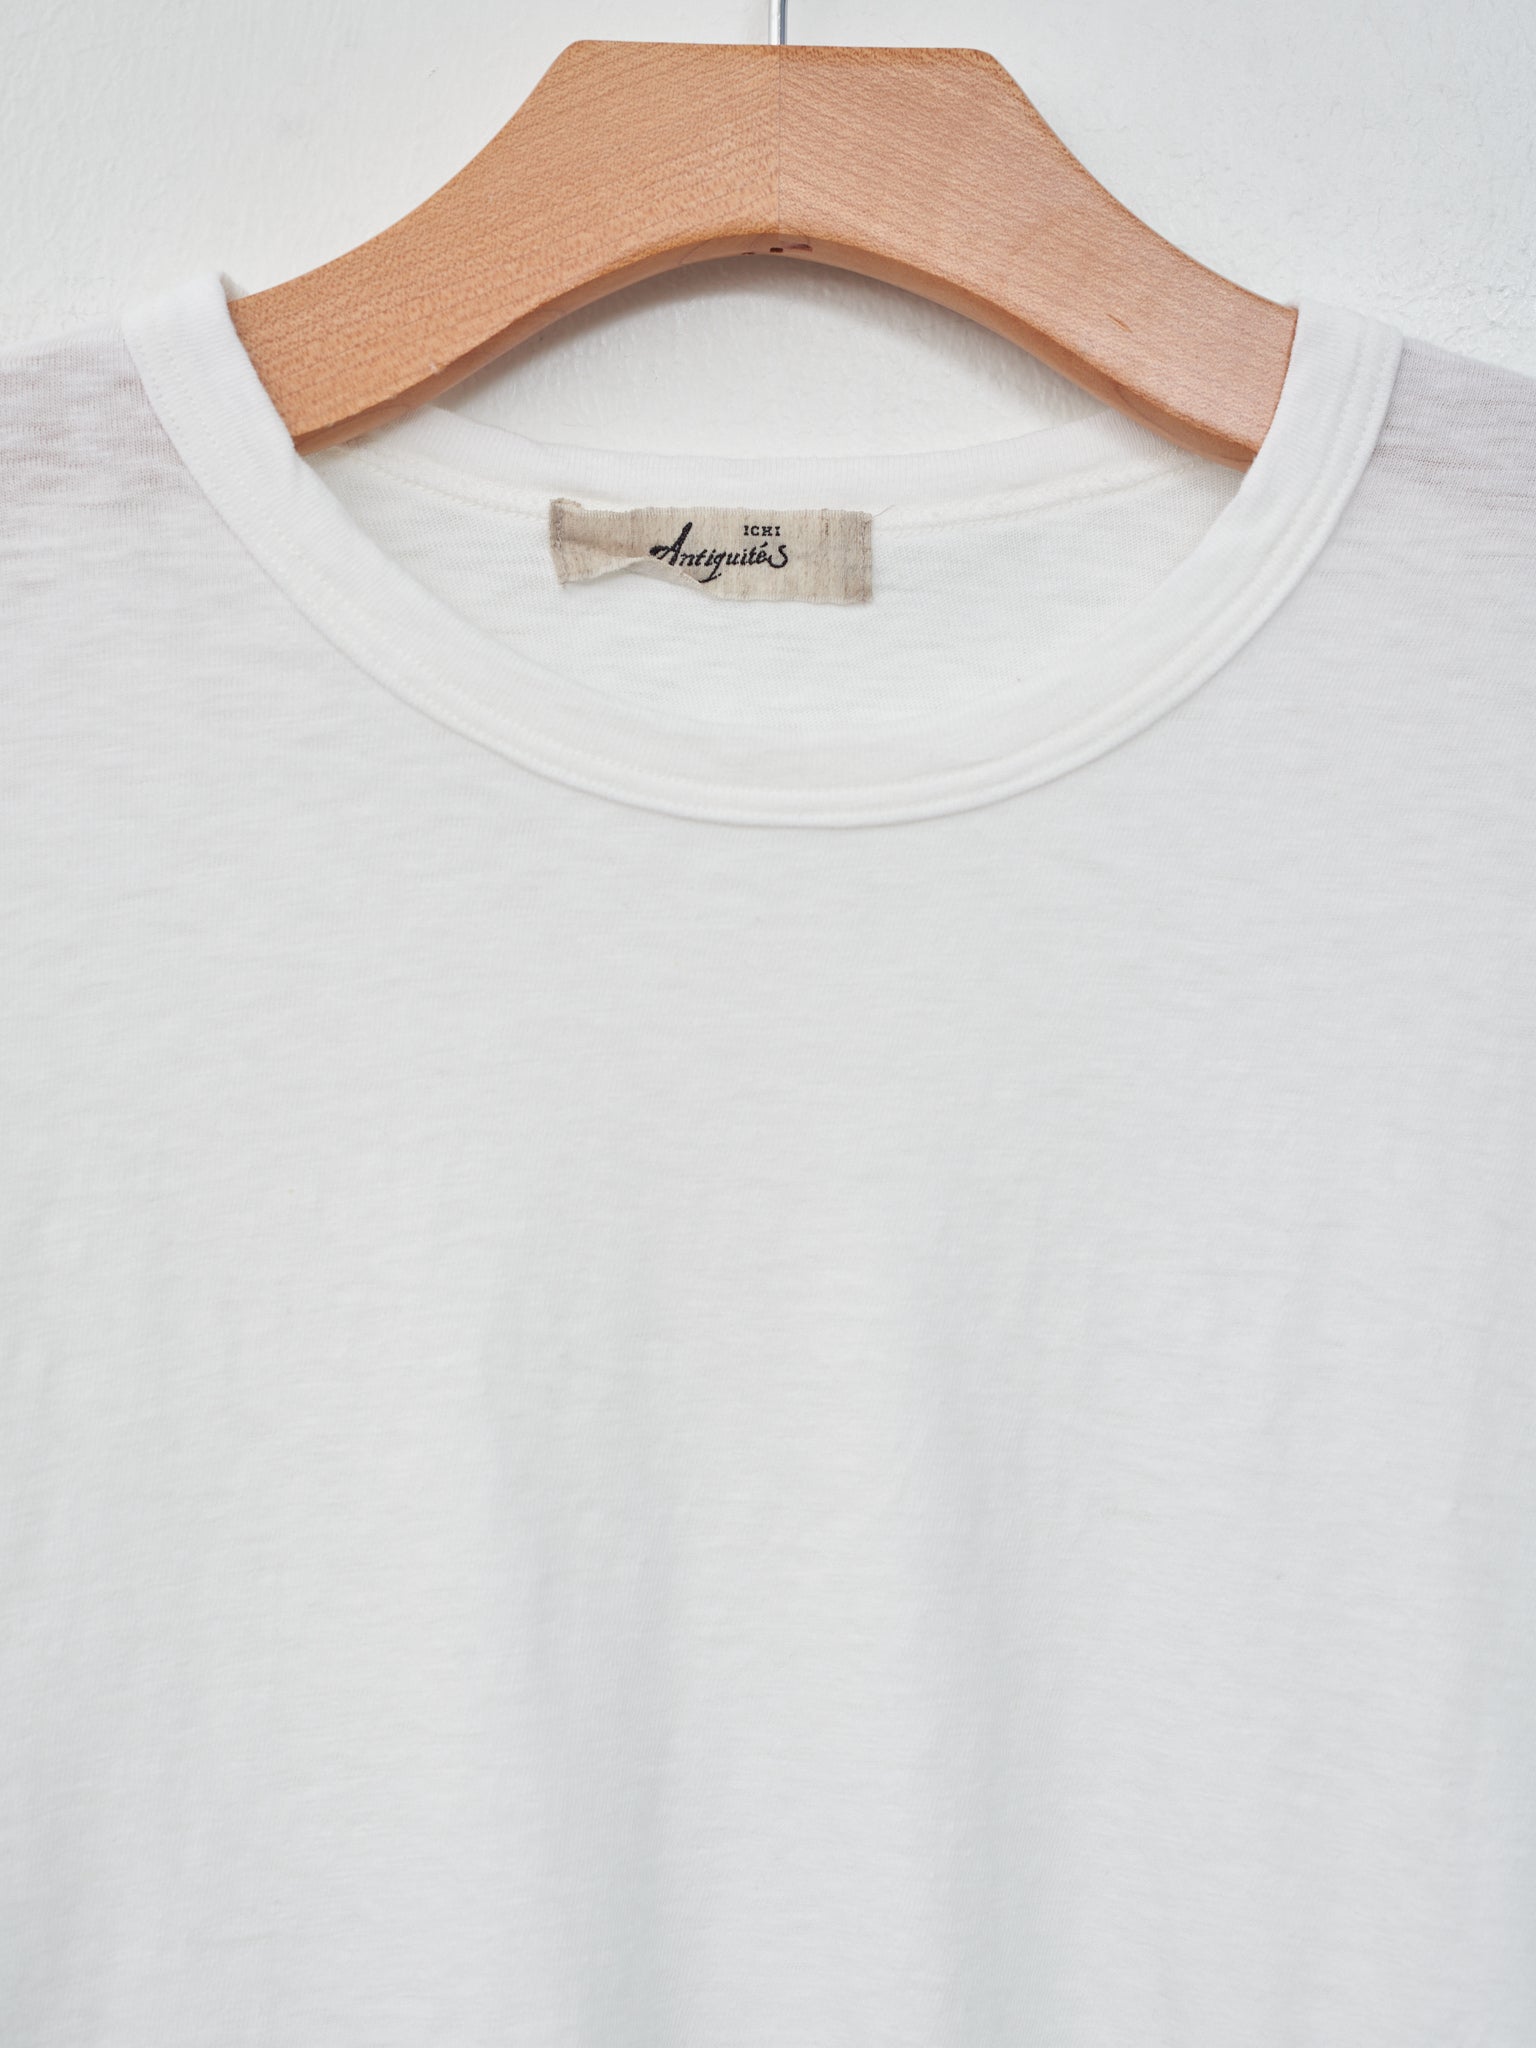 Namu Shop - Ichi T-Shirt - White